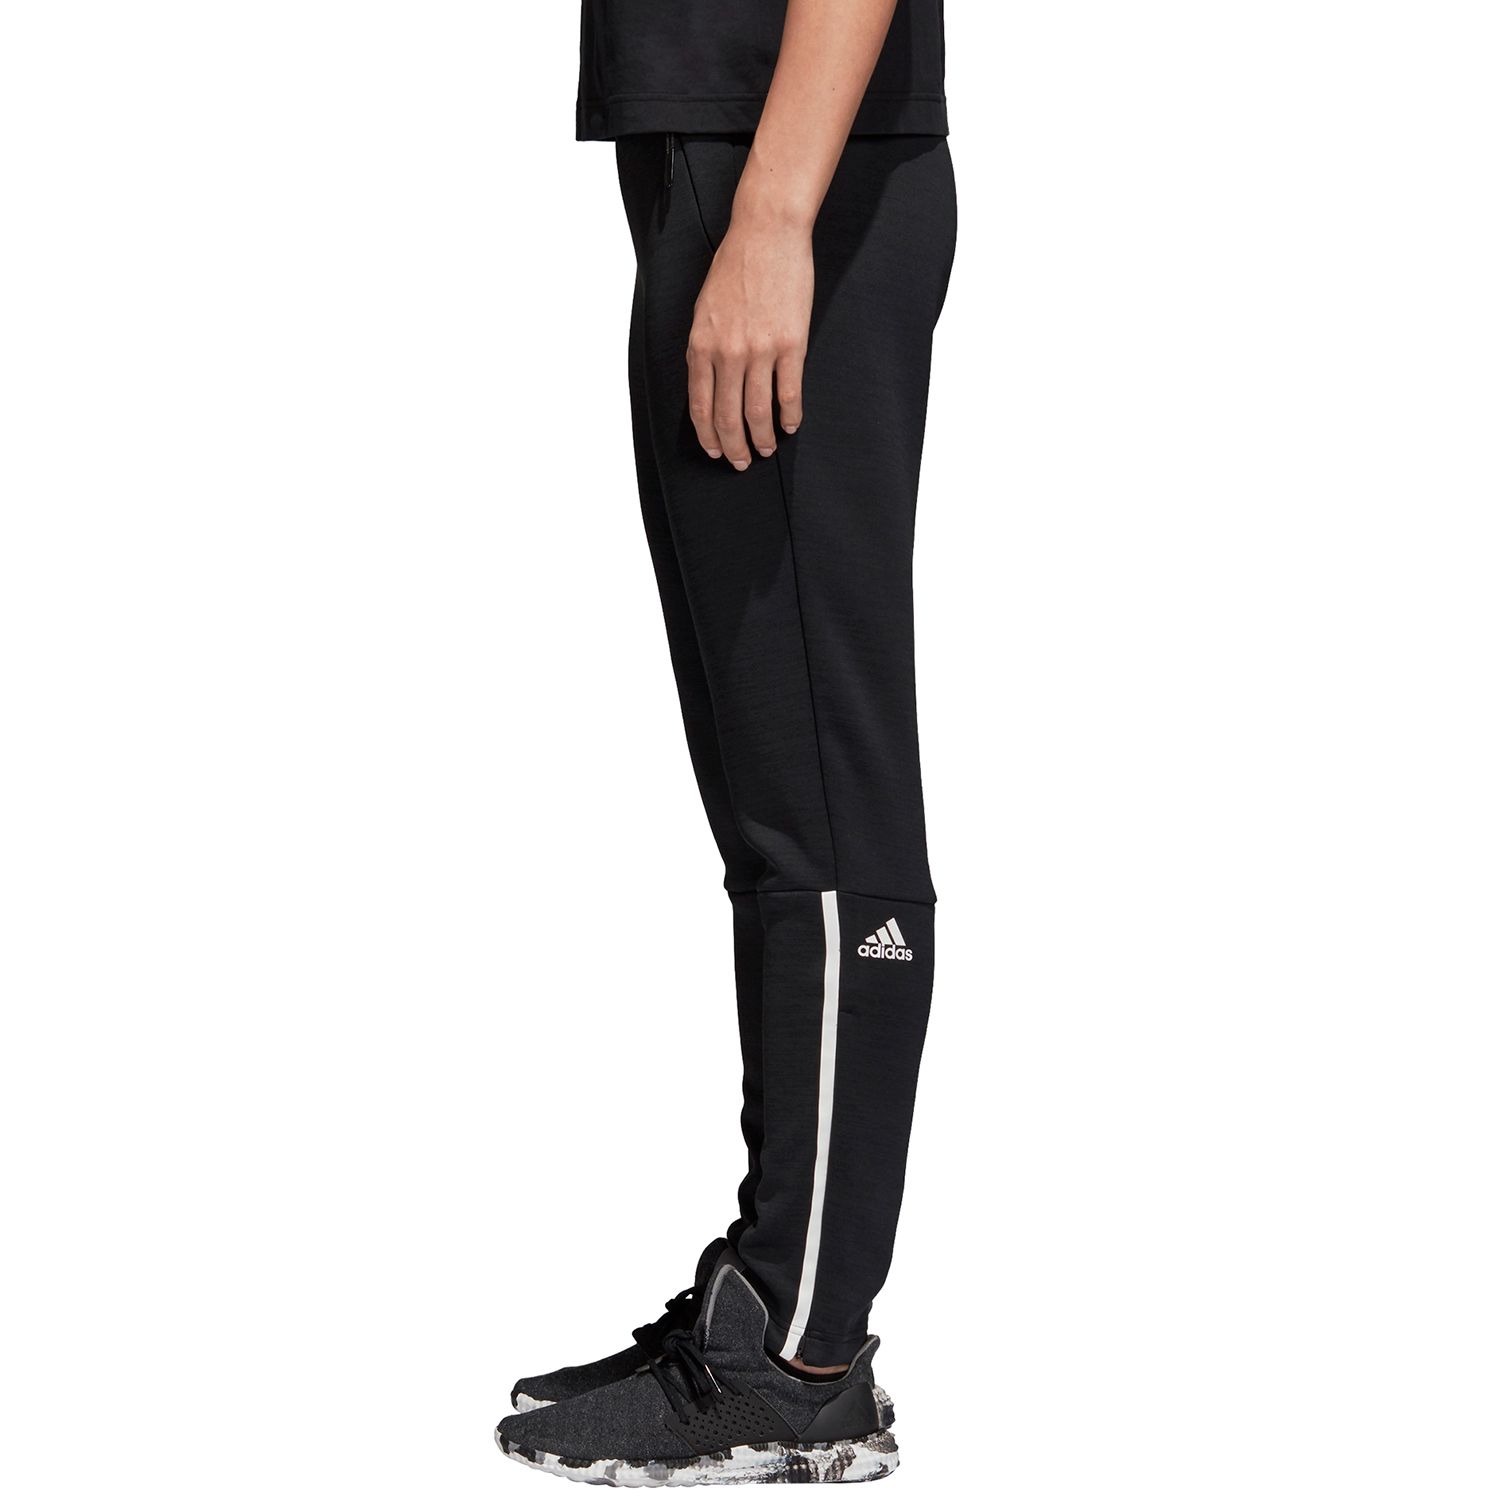 adidas women's exercise pants